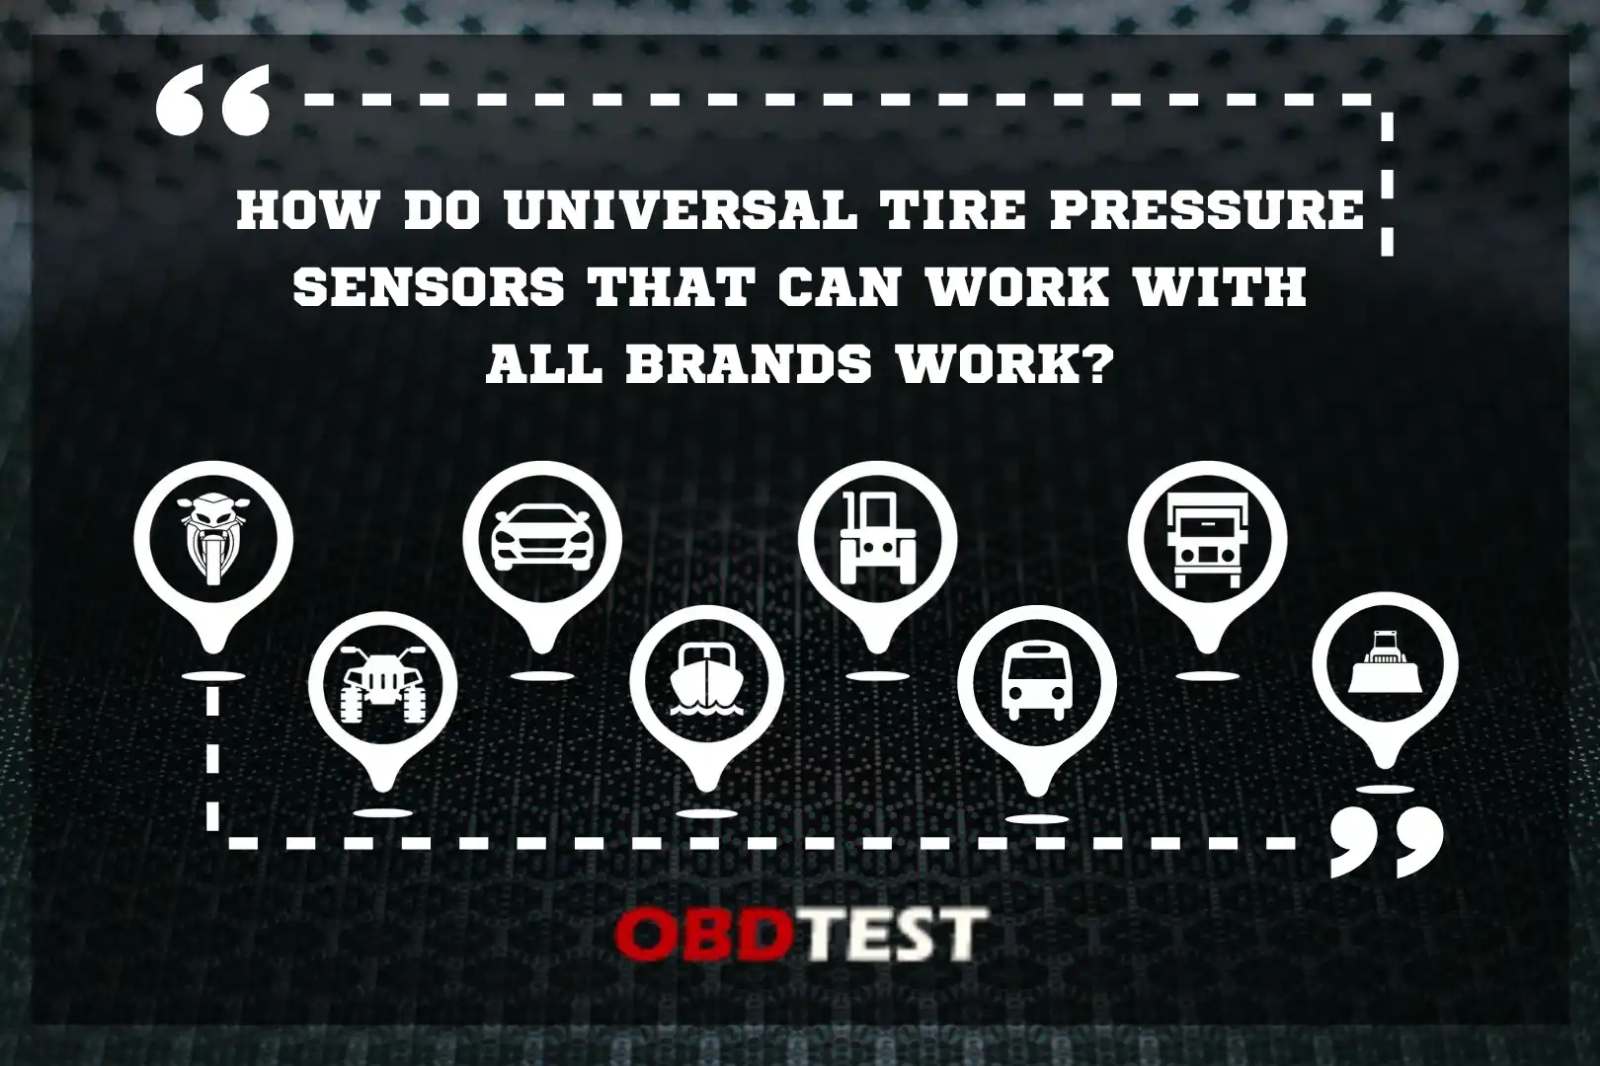 How do Universal Tire pressure sensors work?